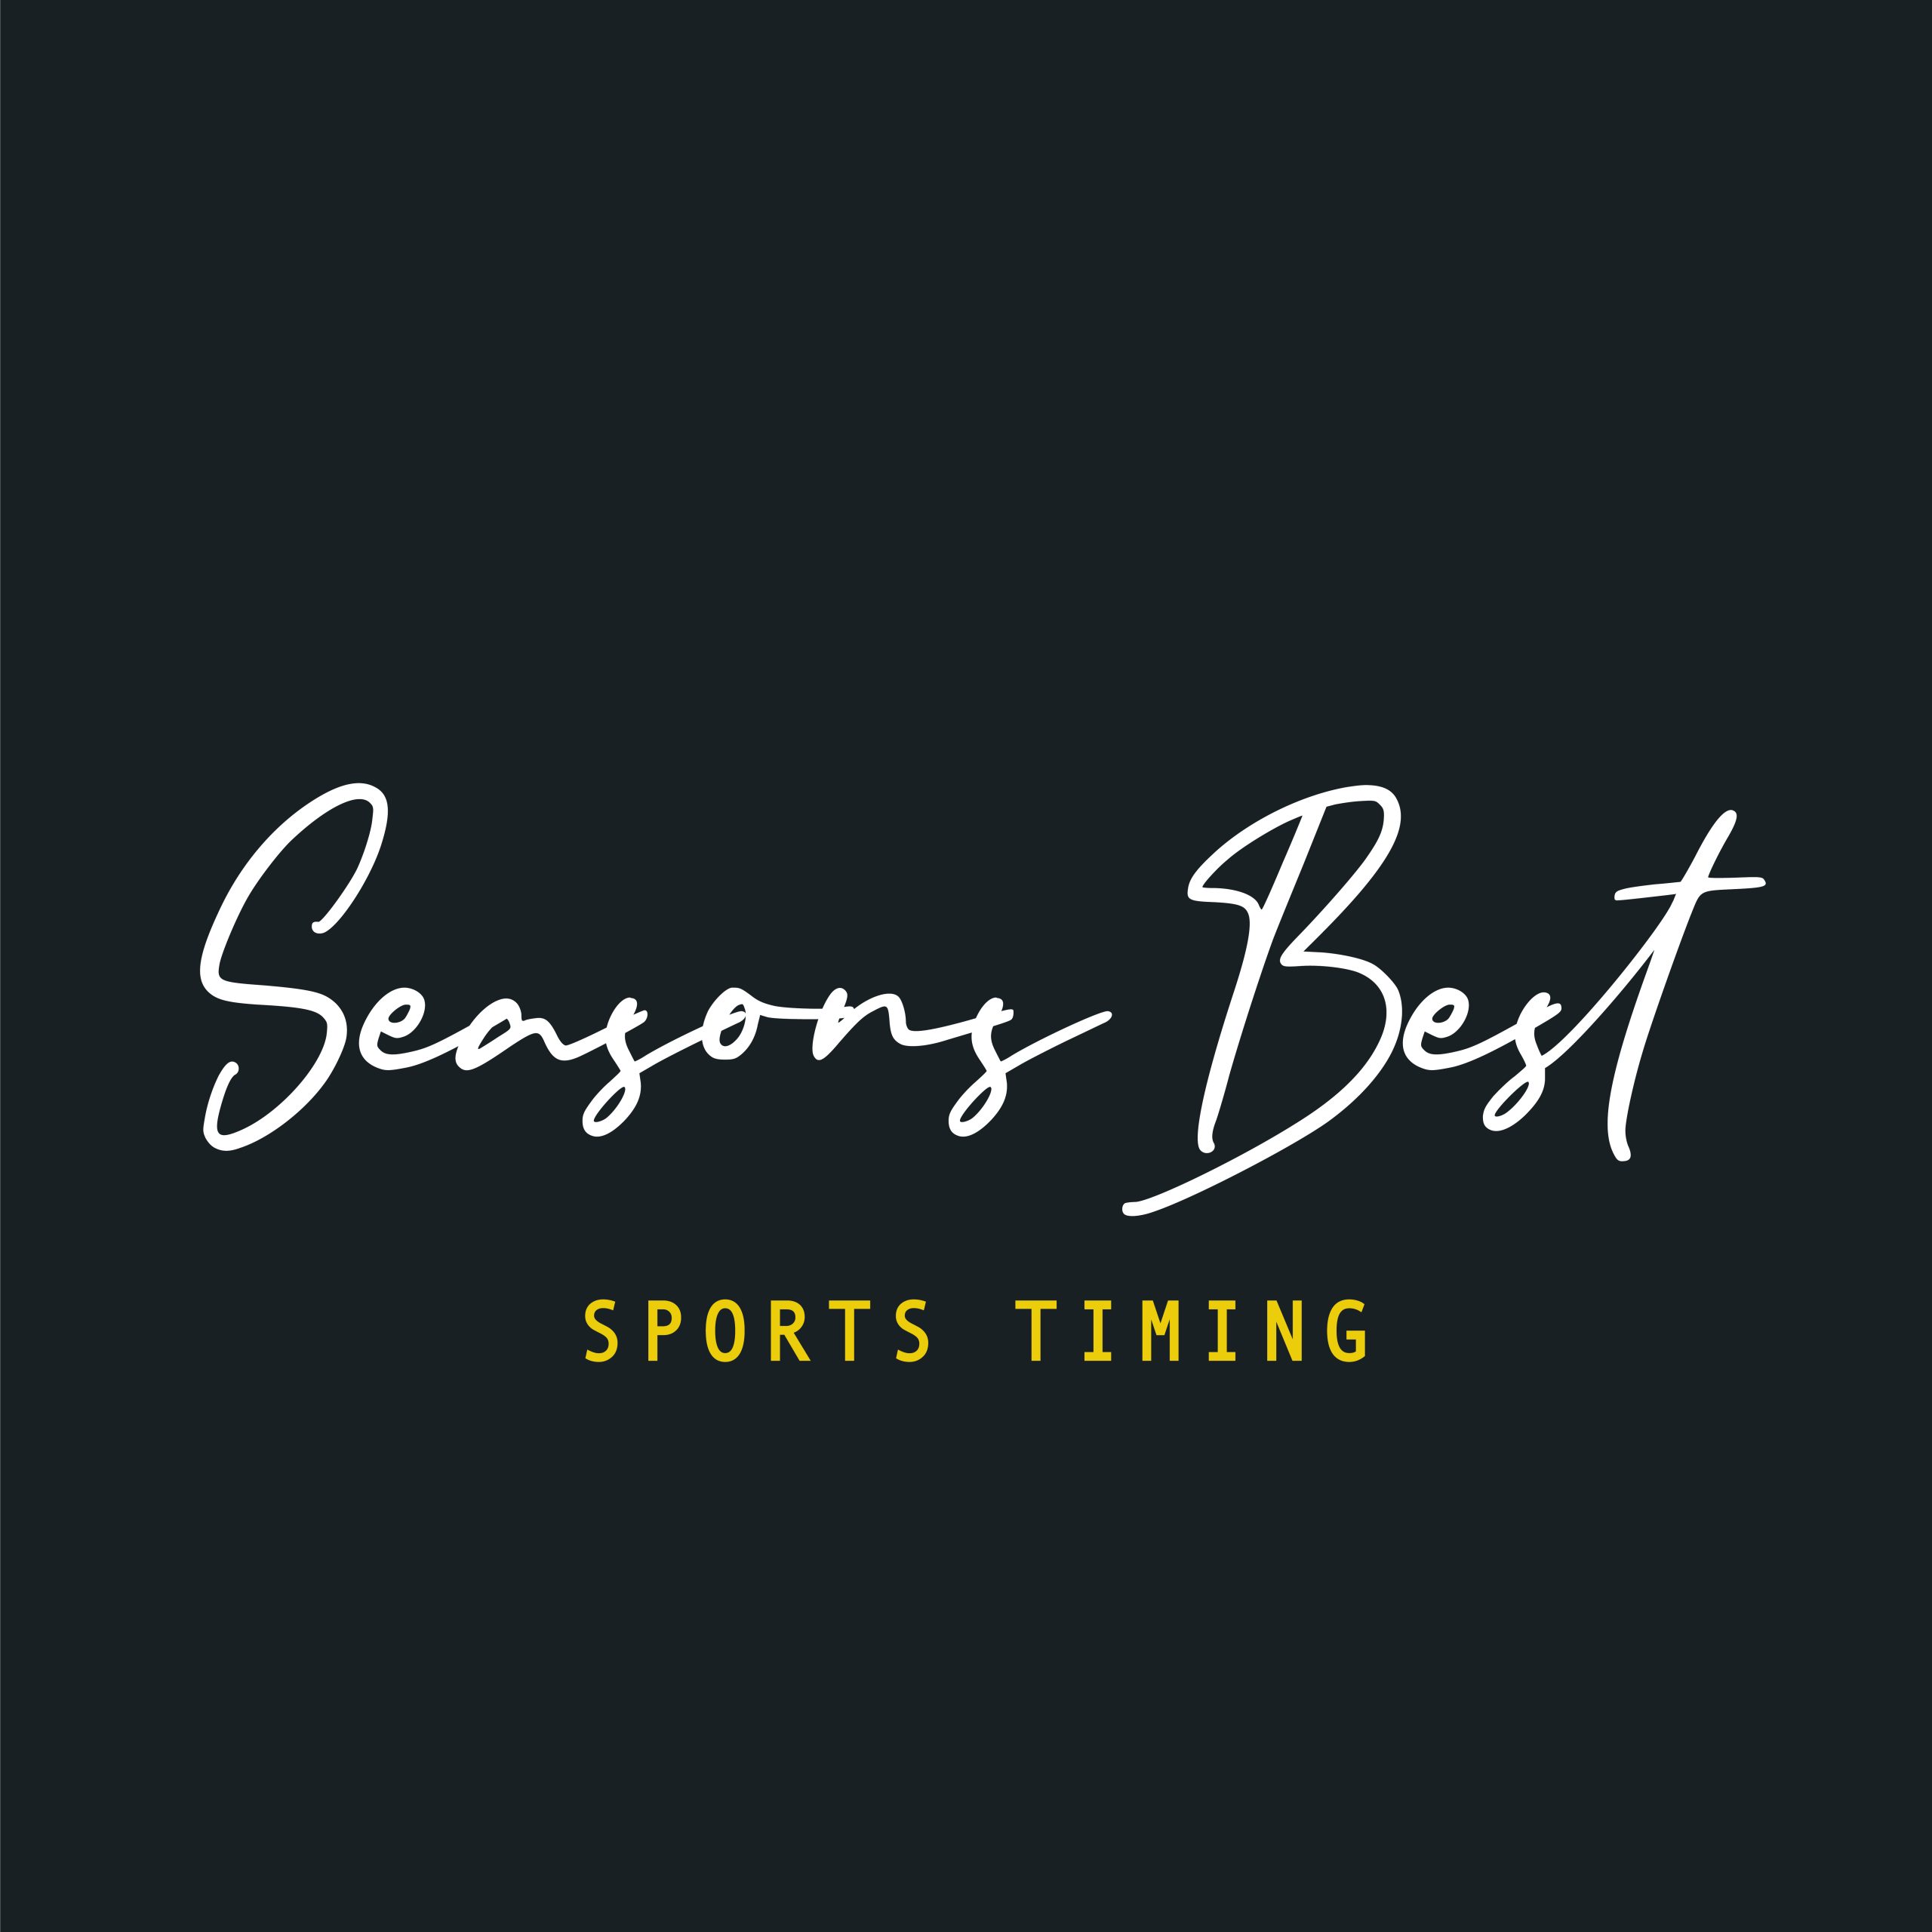 Seasons Best Sports Timing